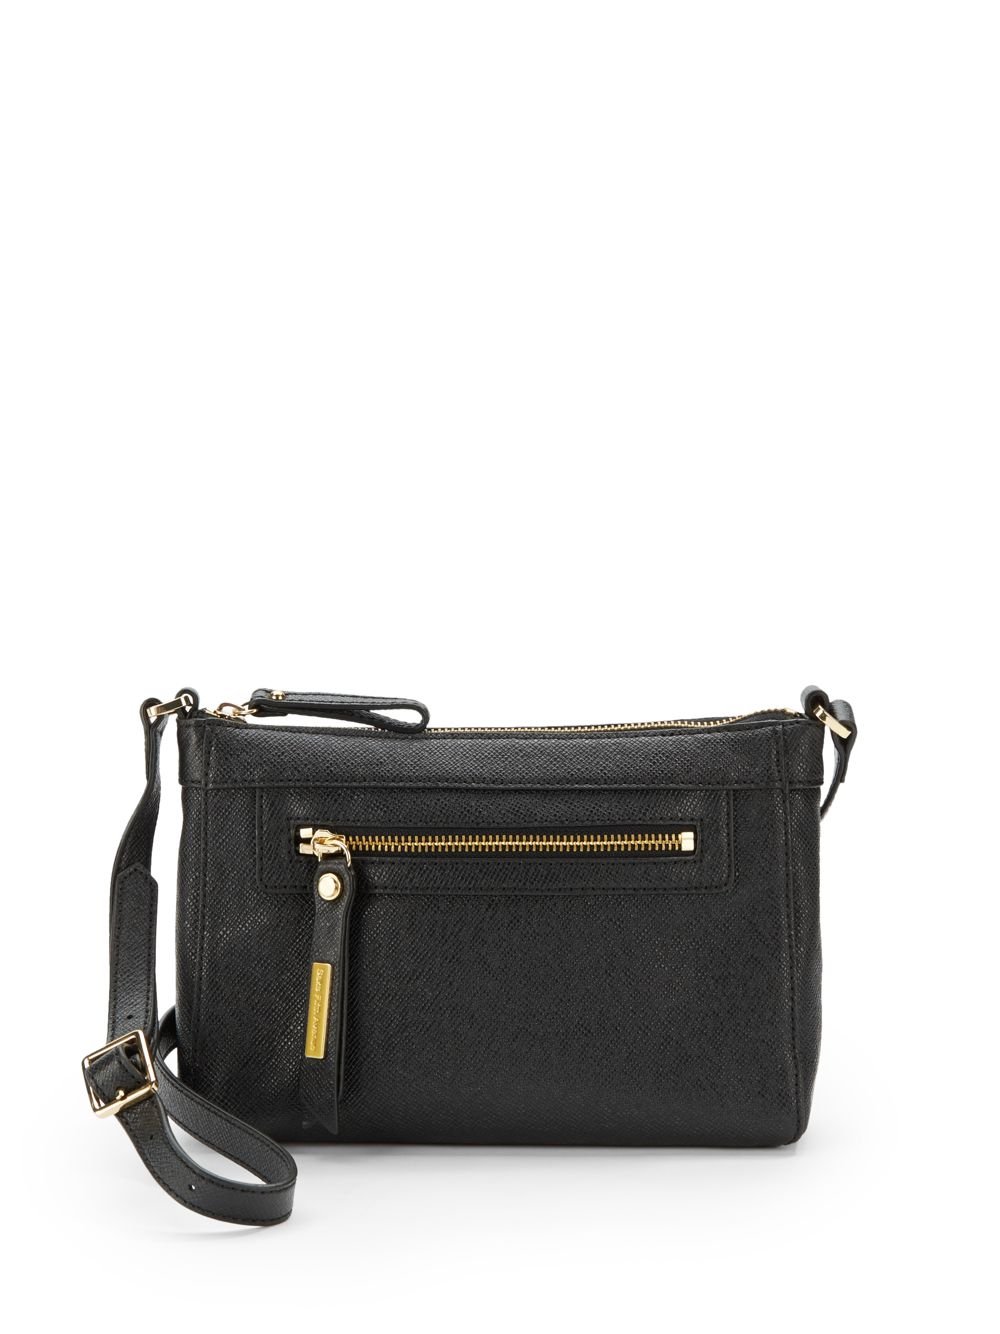 Saks Fifth Avenue Black Label Saffiano Leather Mini Crossbody Bag in Black | Lyst